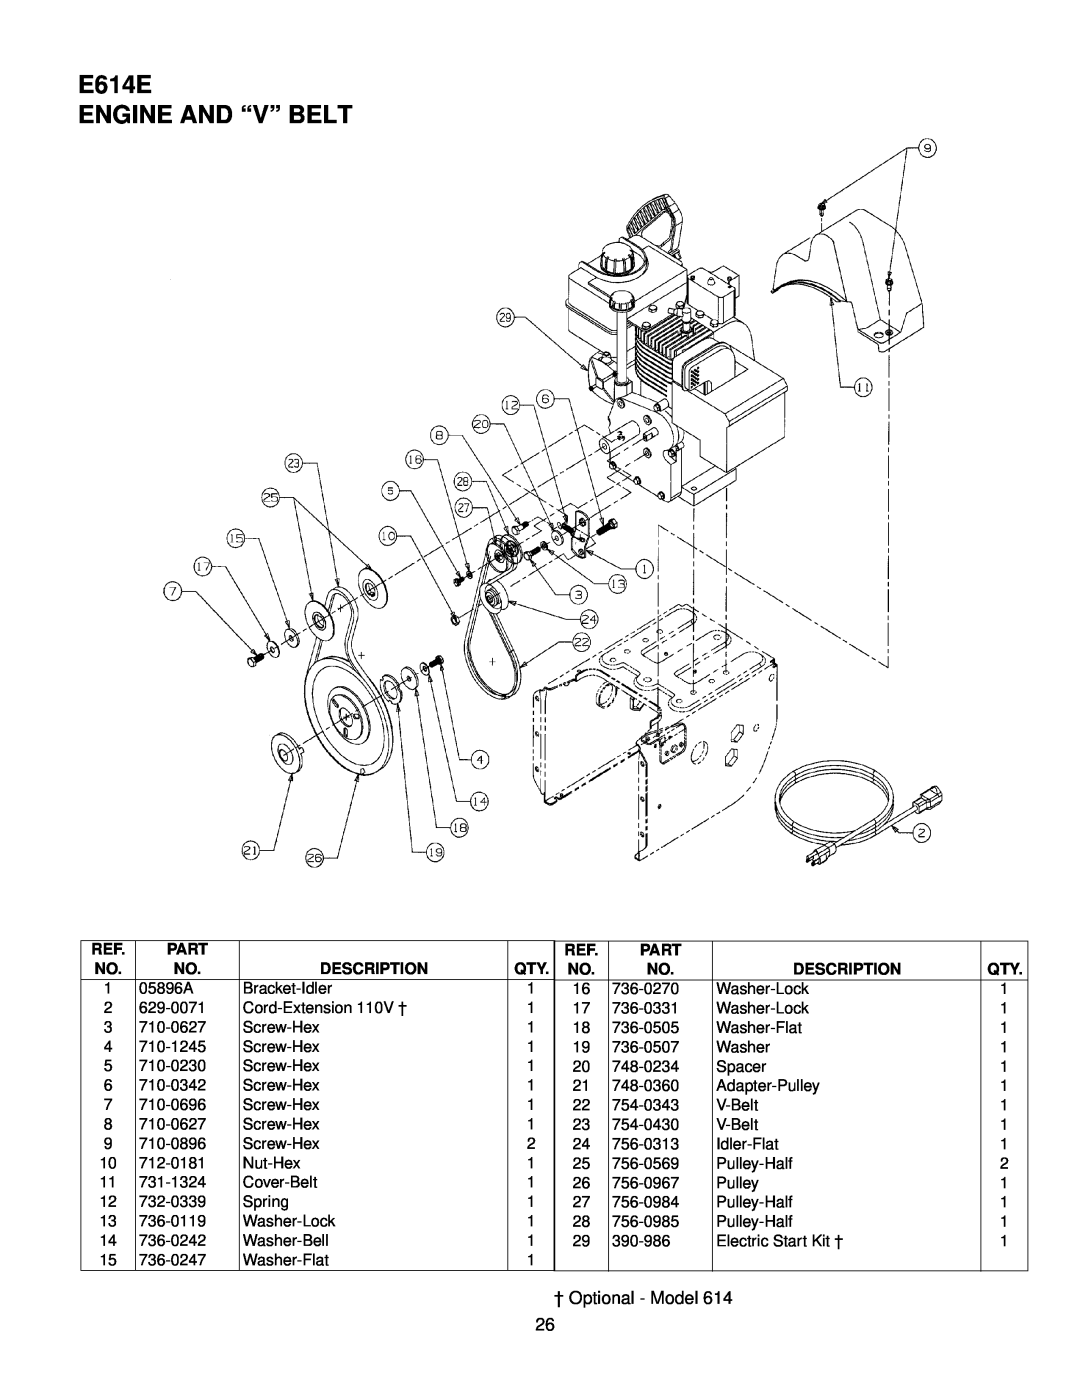 MTD E602E, E662E, E642F manual E614E ENGINE AND “V” BELT, † Optional - Model 